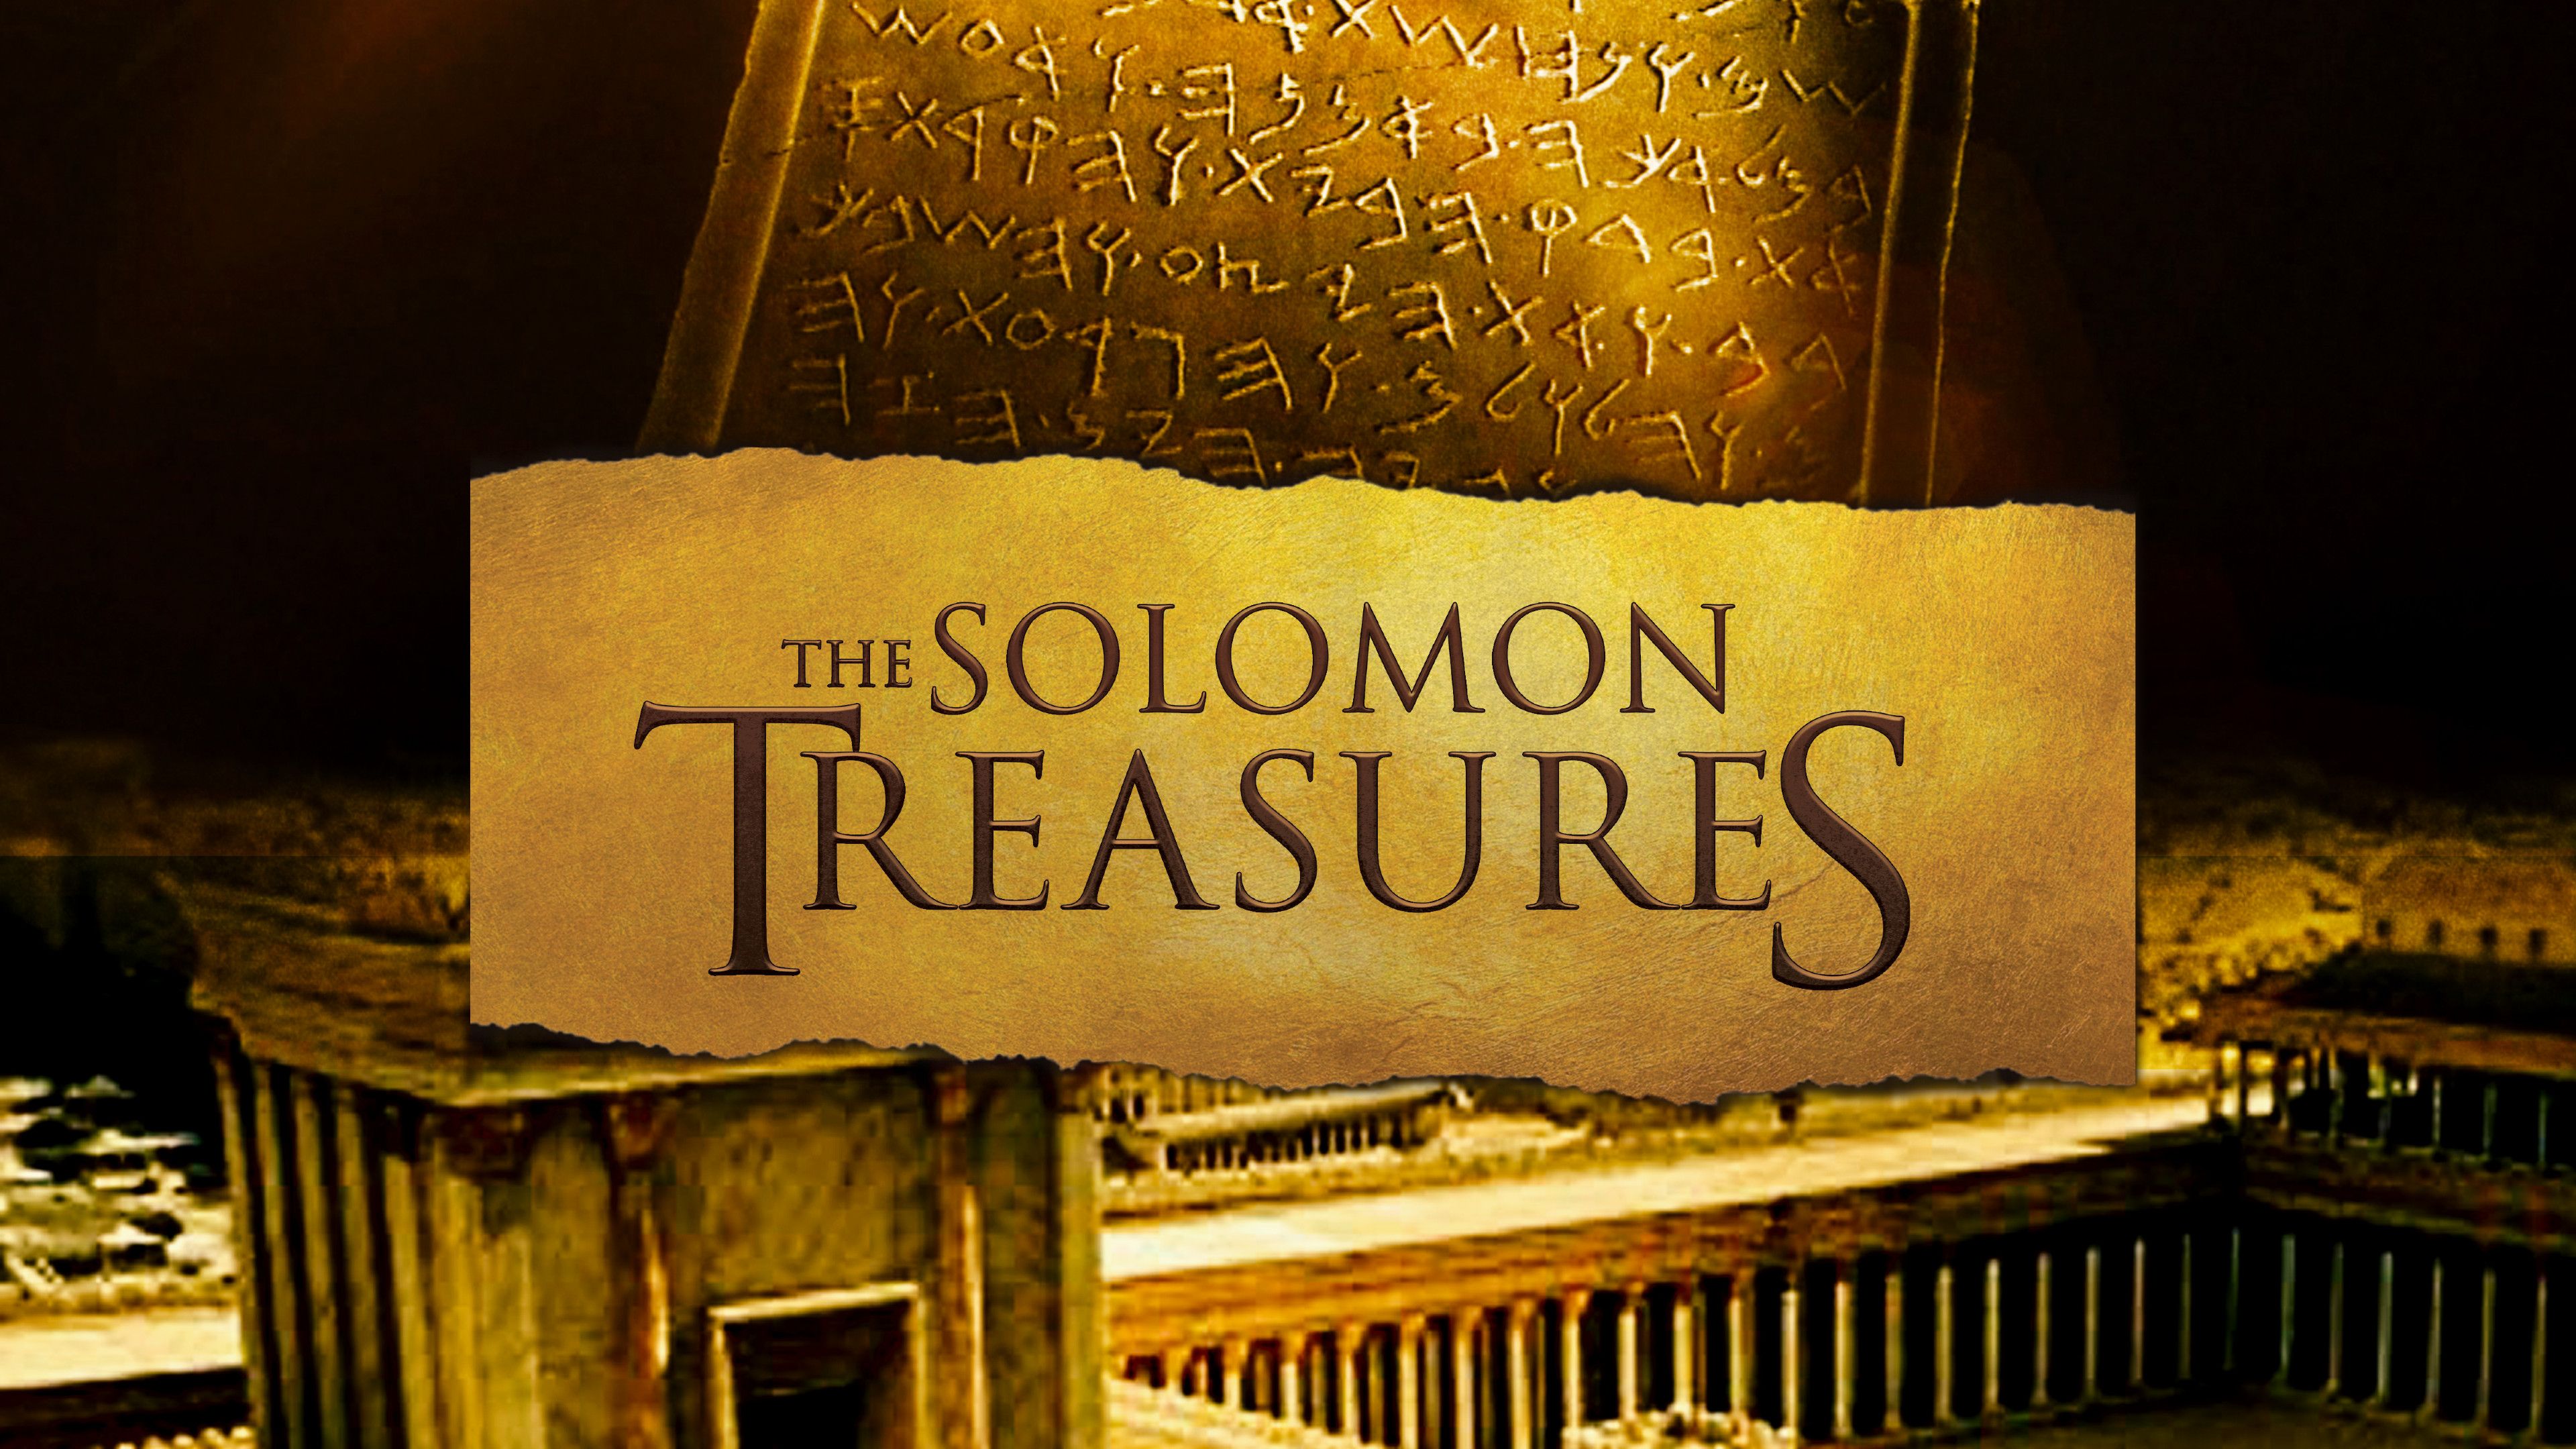 The Solomon Treasures